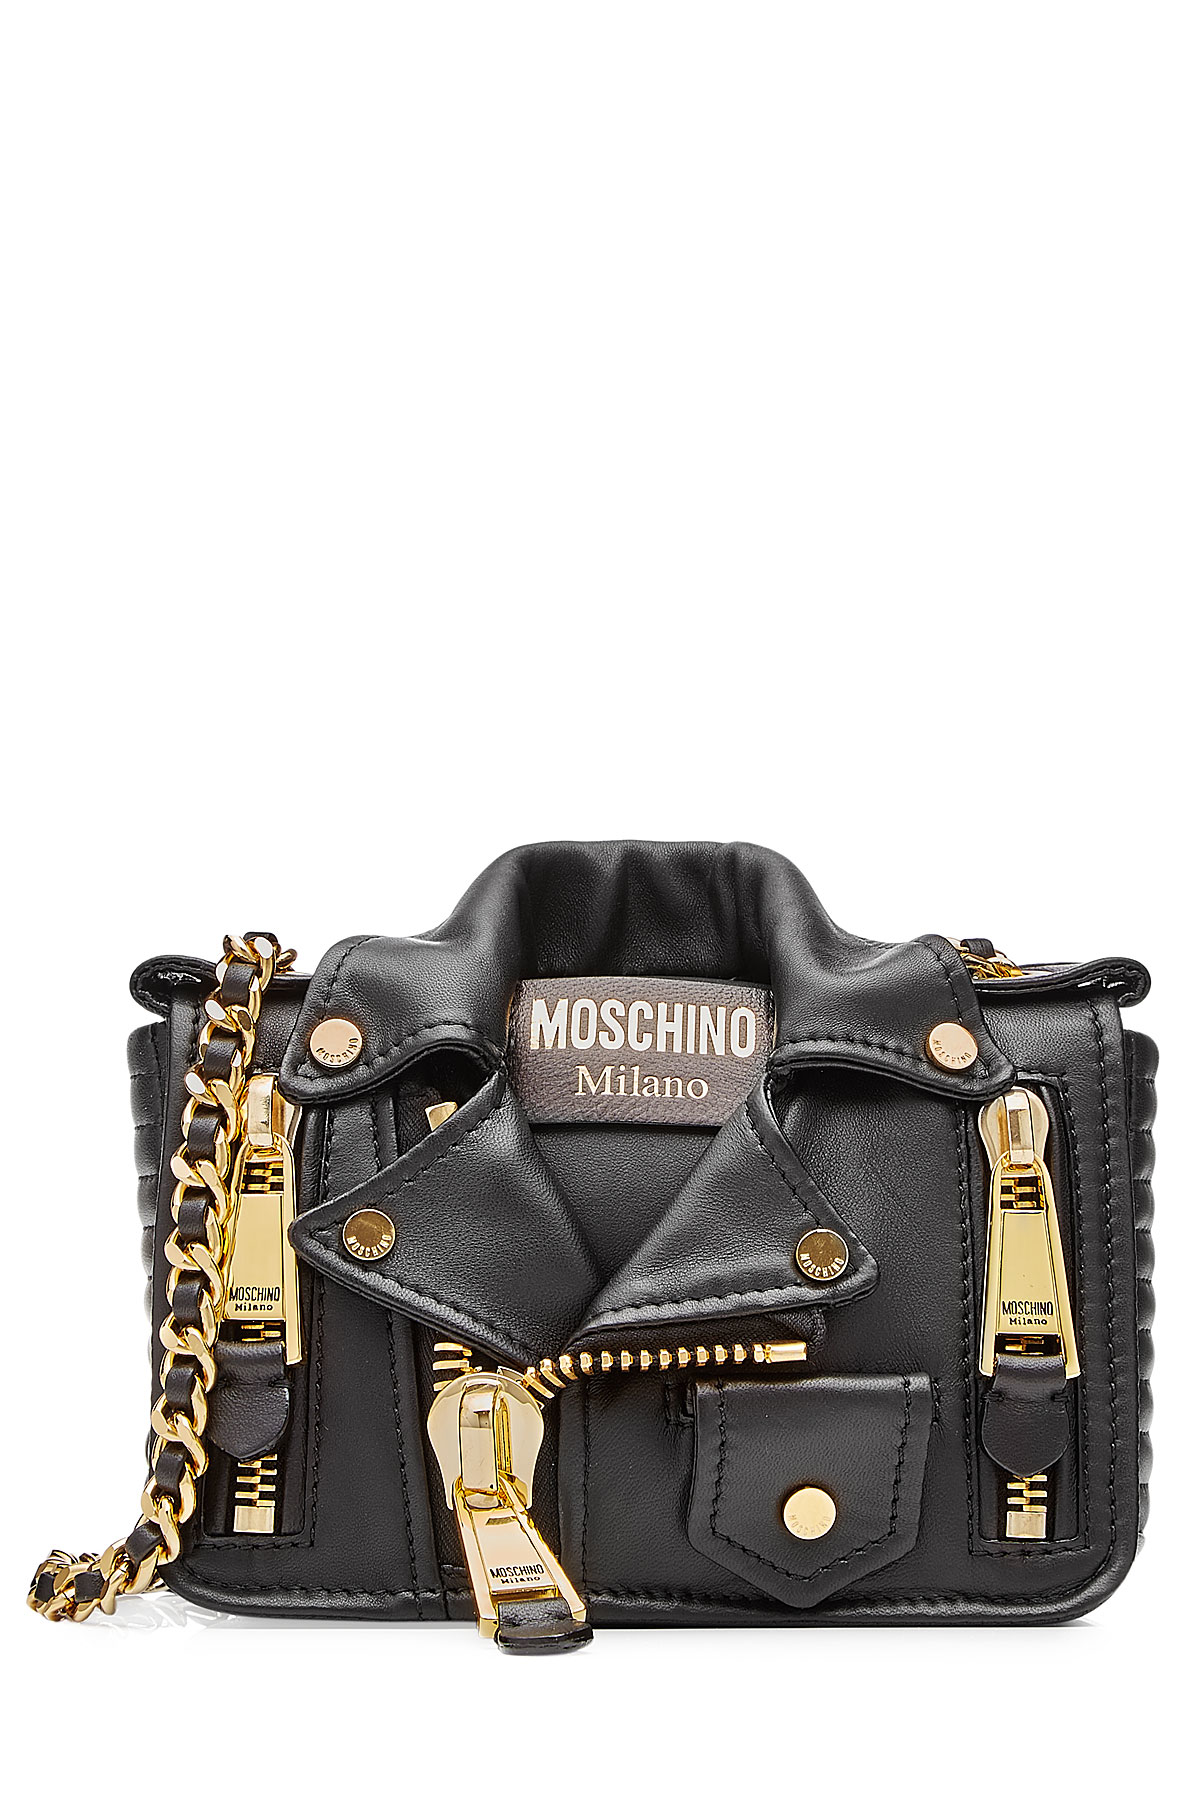 Moschino Biker Leather Shoulder Bag In Black - Lyst 308